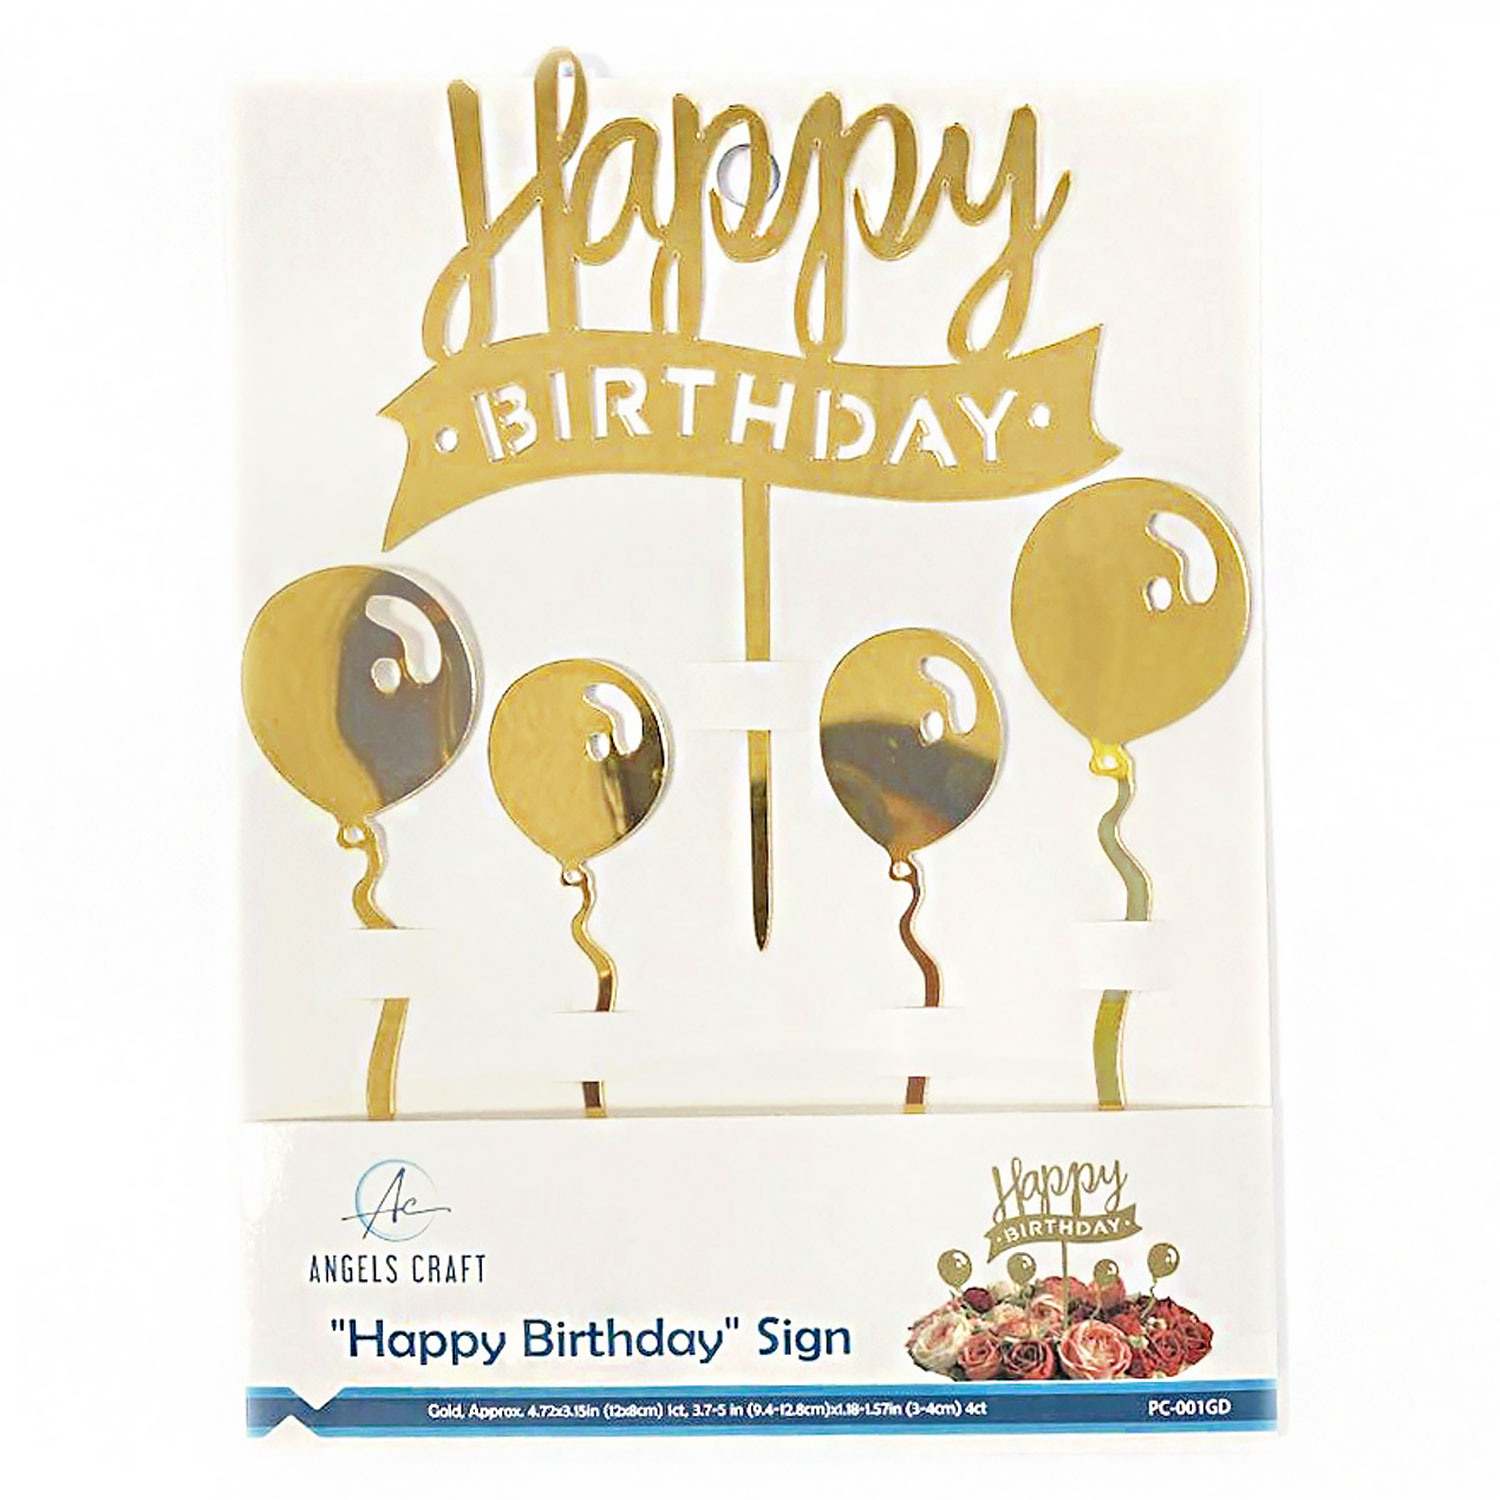 Gold Happy Birthday Cake Topper